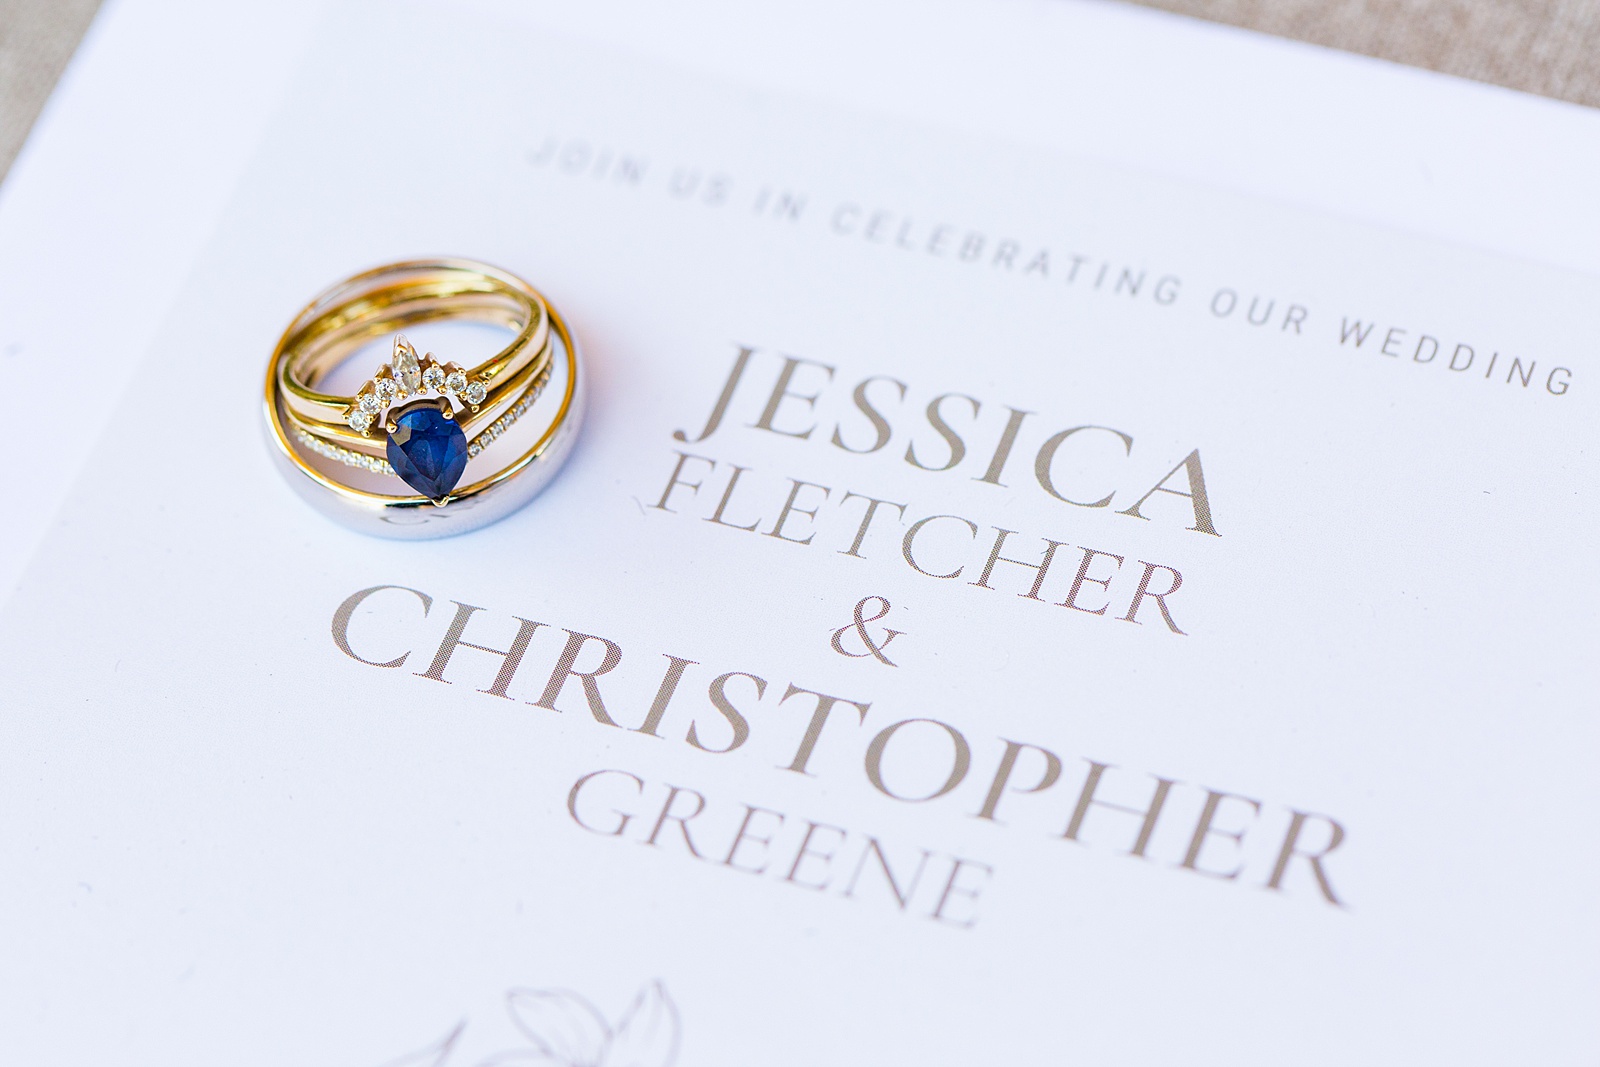 Unique Sapphire wedding ring on top of wedding invitations by Arizona wedding photographer PMA Photography.